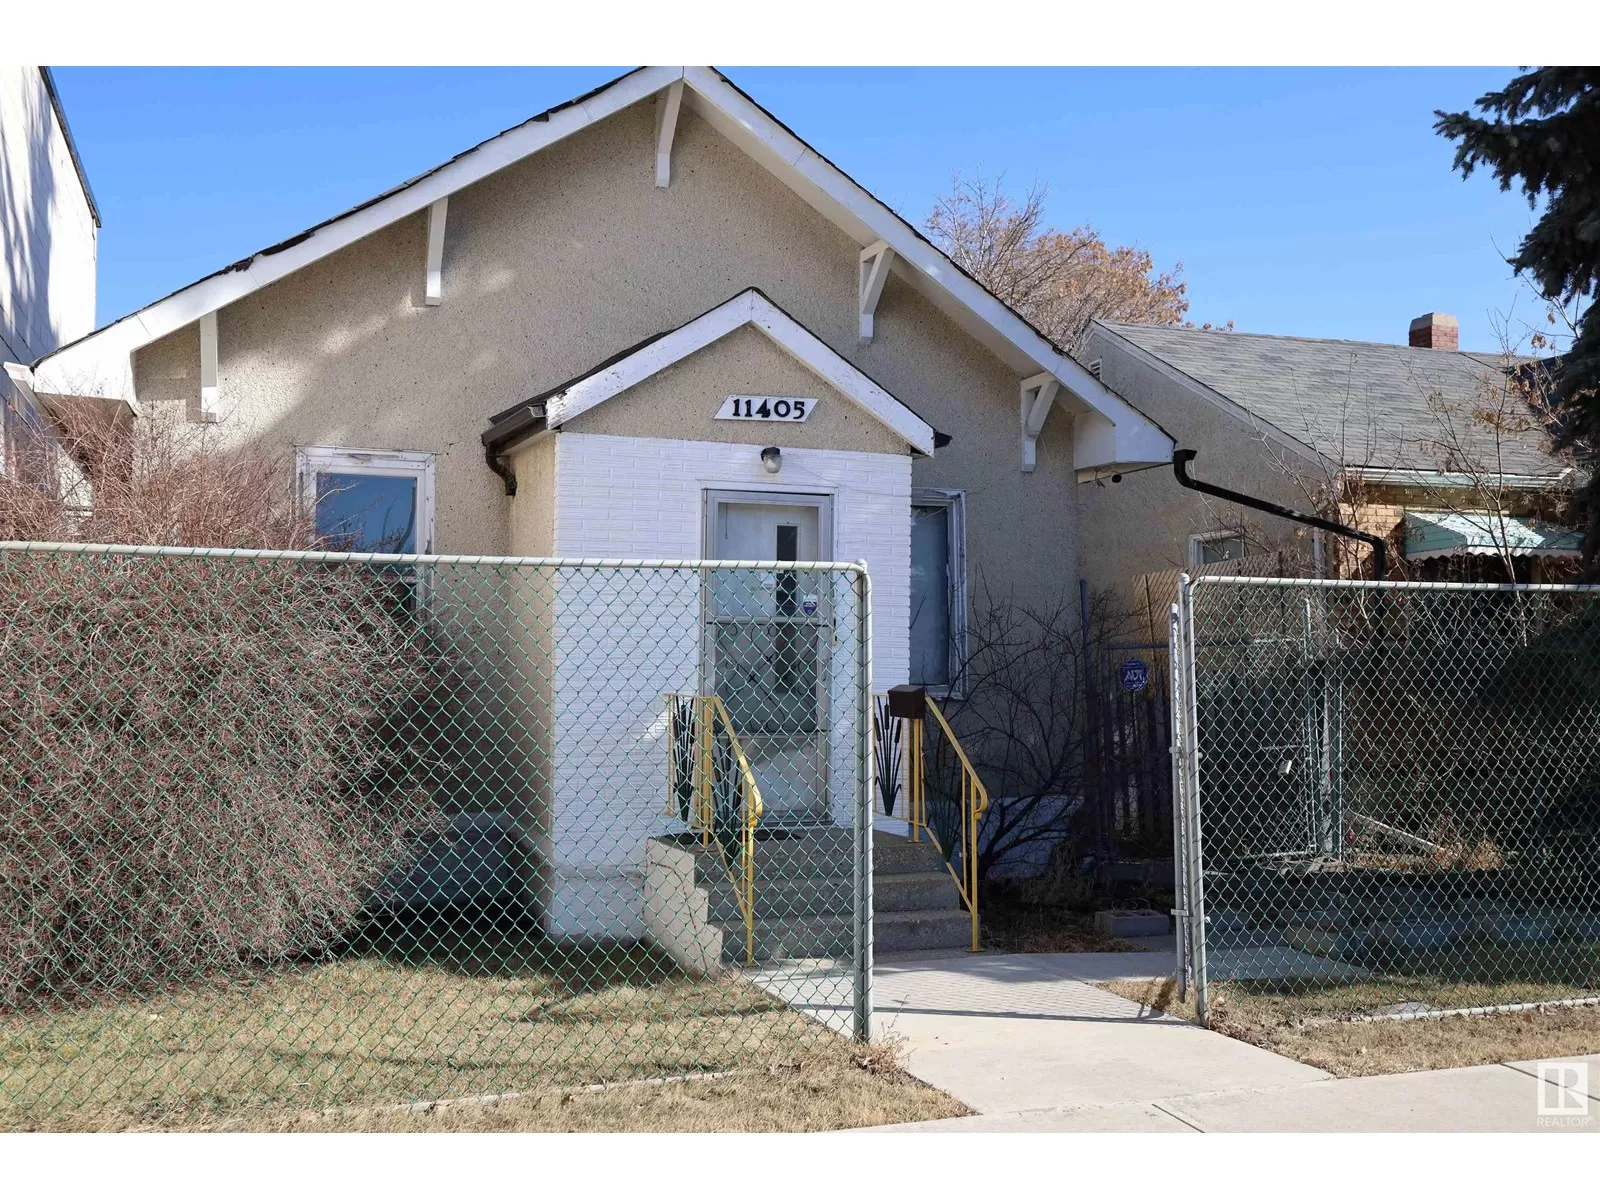 House for rent: 11405 86 St Nw, Edmonton, Alberta T5B 3J2